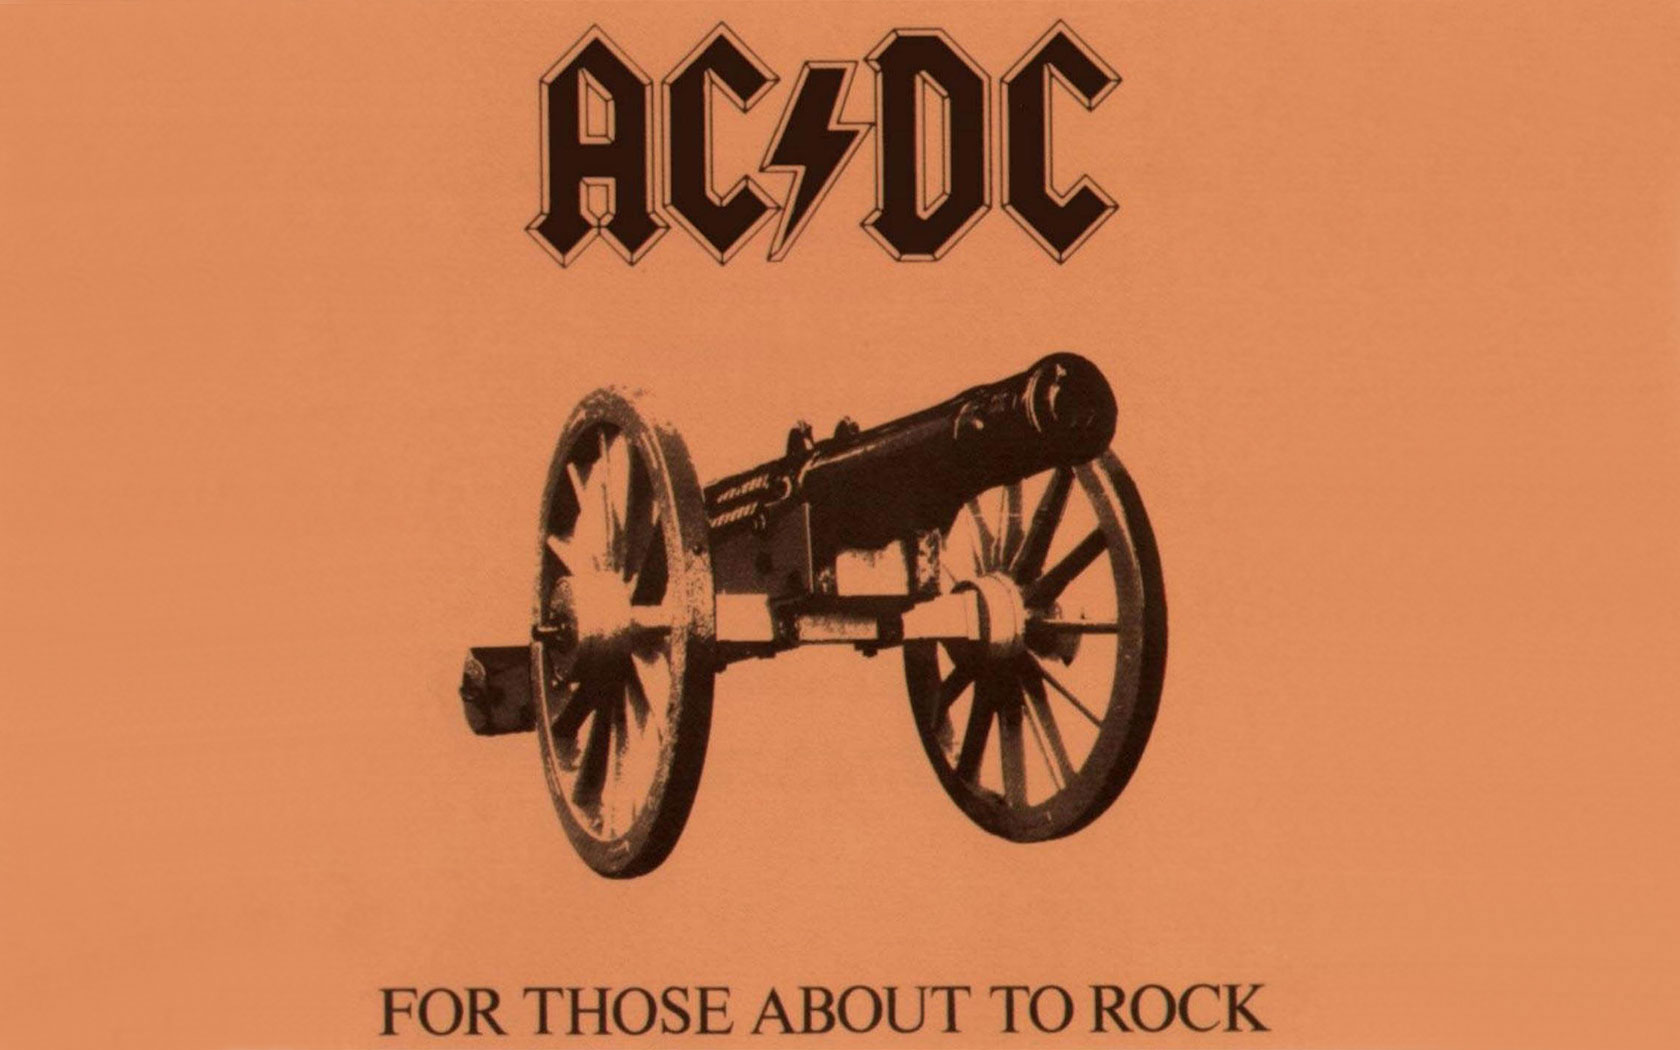 AC/DC Rocks! - AC/DC Wallpaper (27691606) - Fanpop